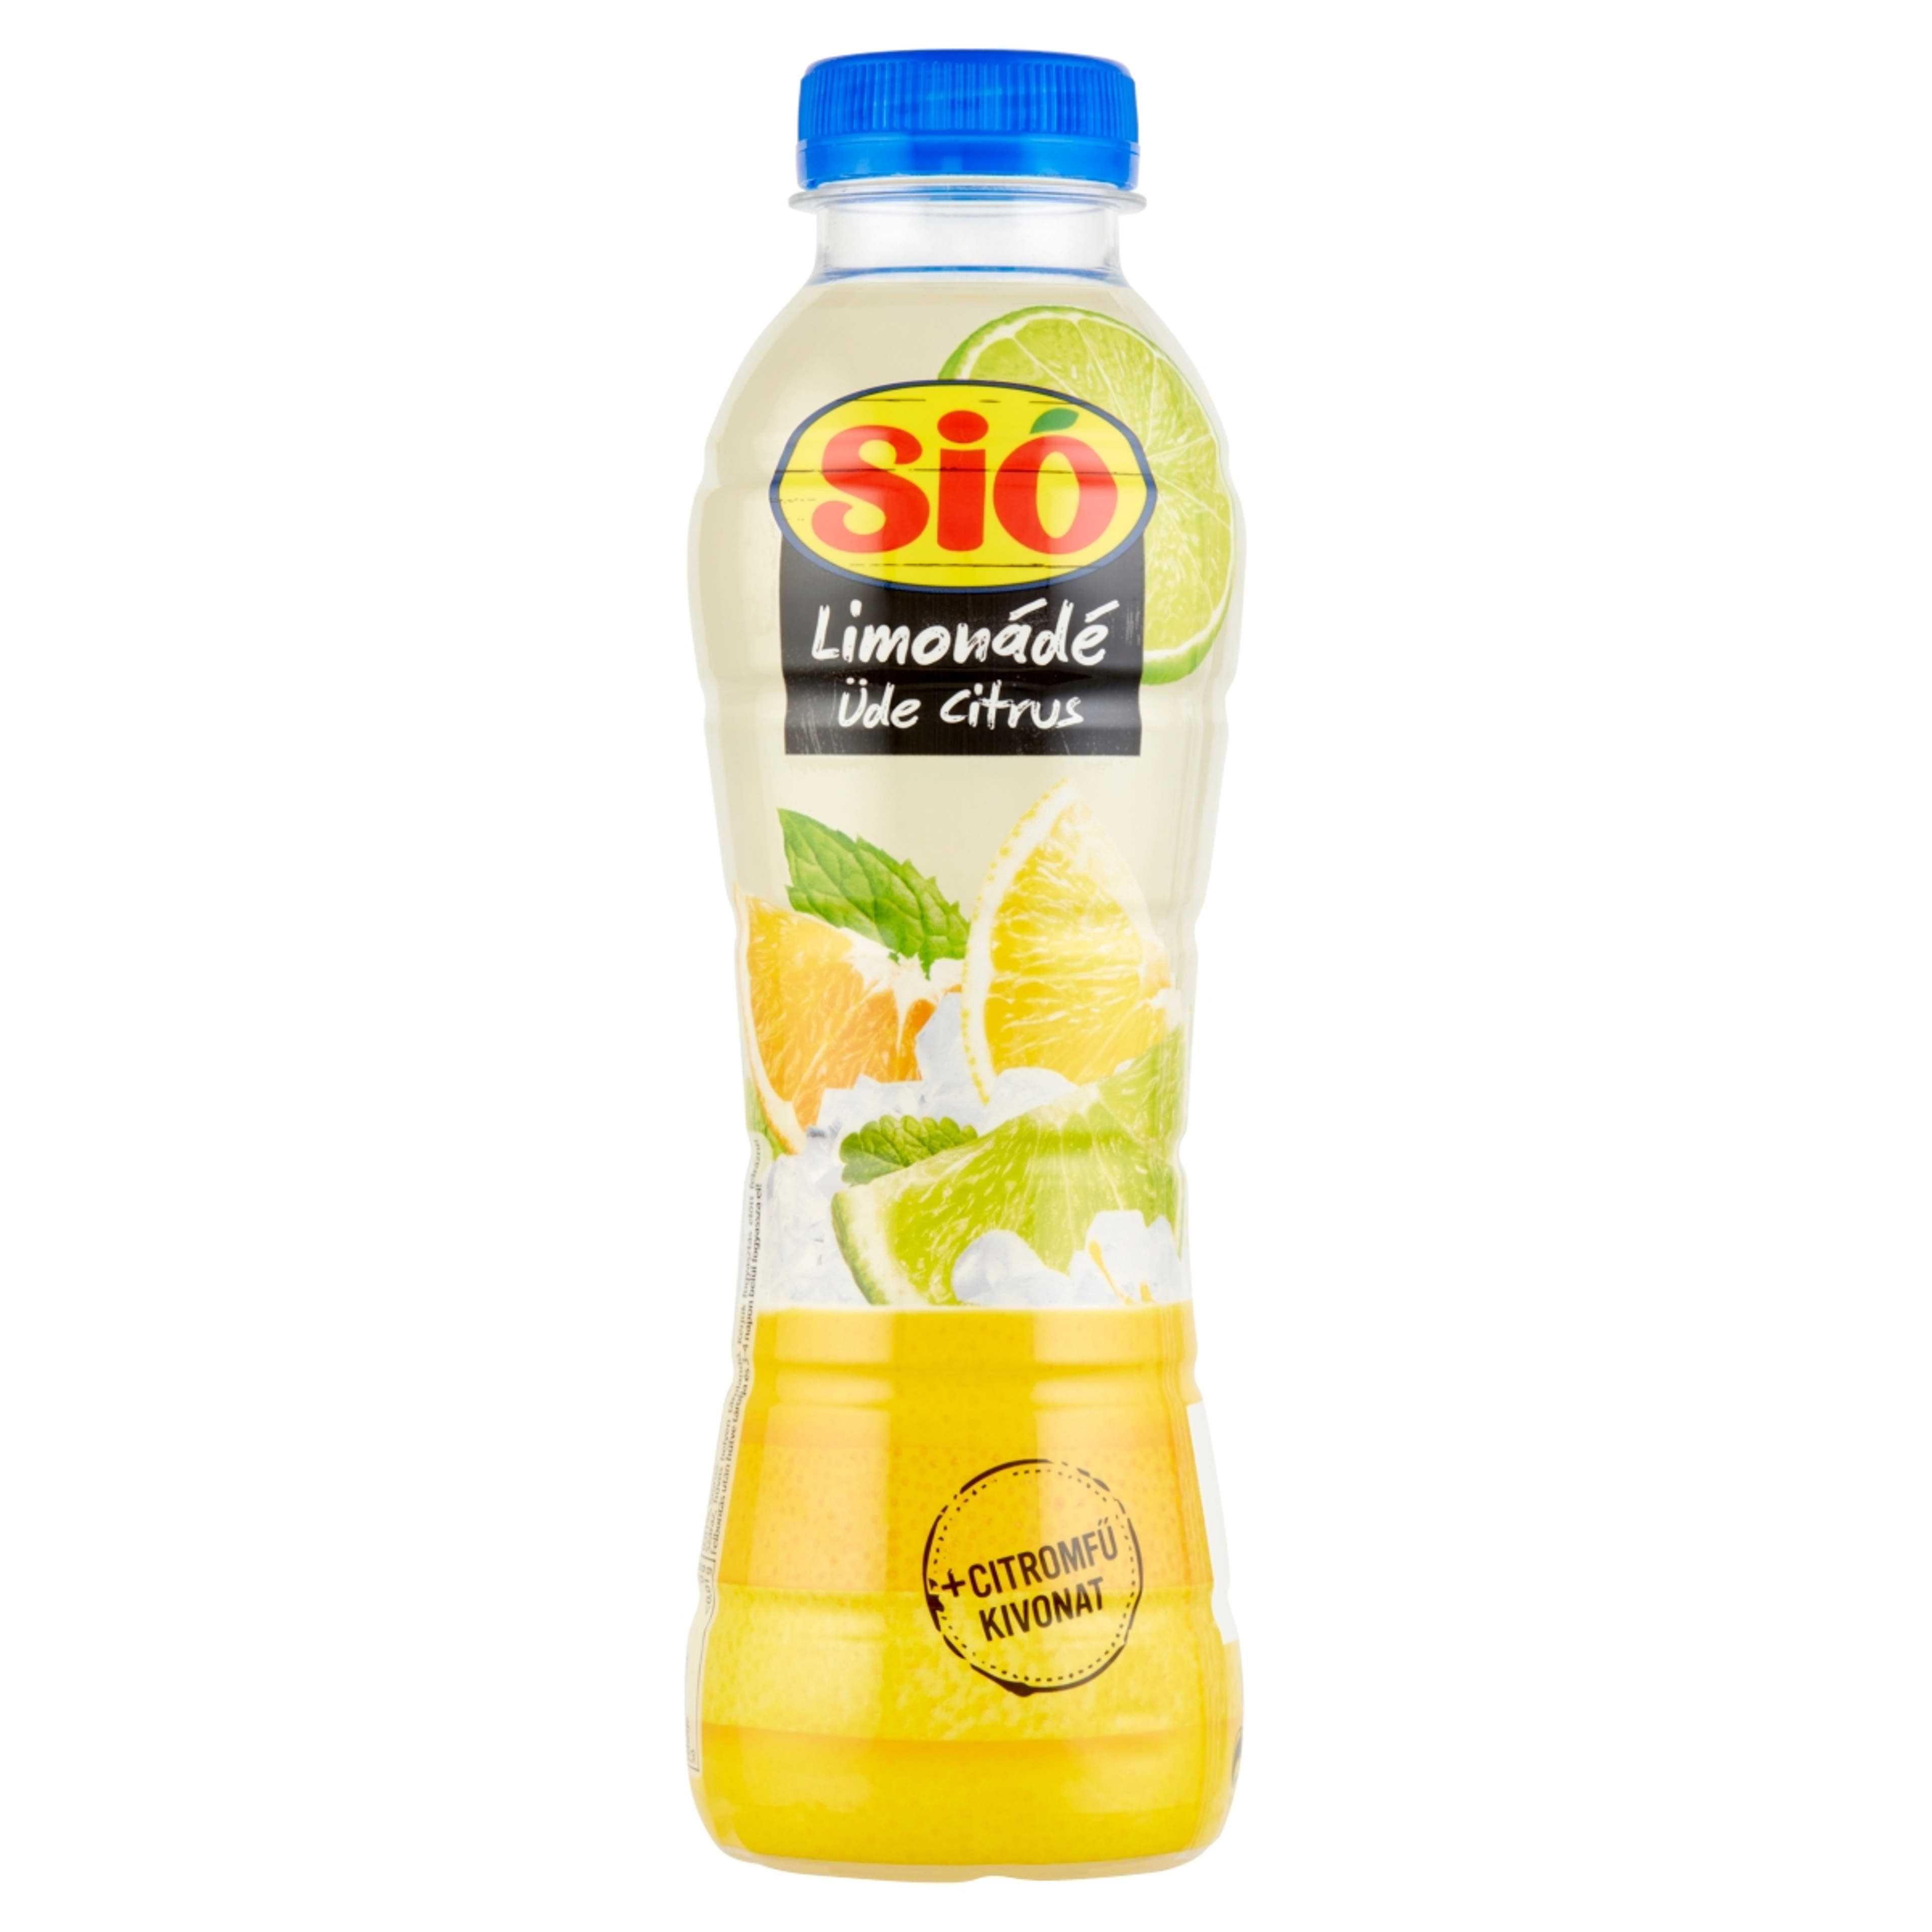 Sio limonádé üde citrus 8% - 500 ml-1